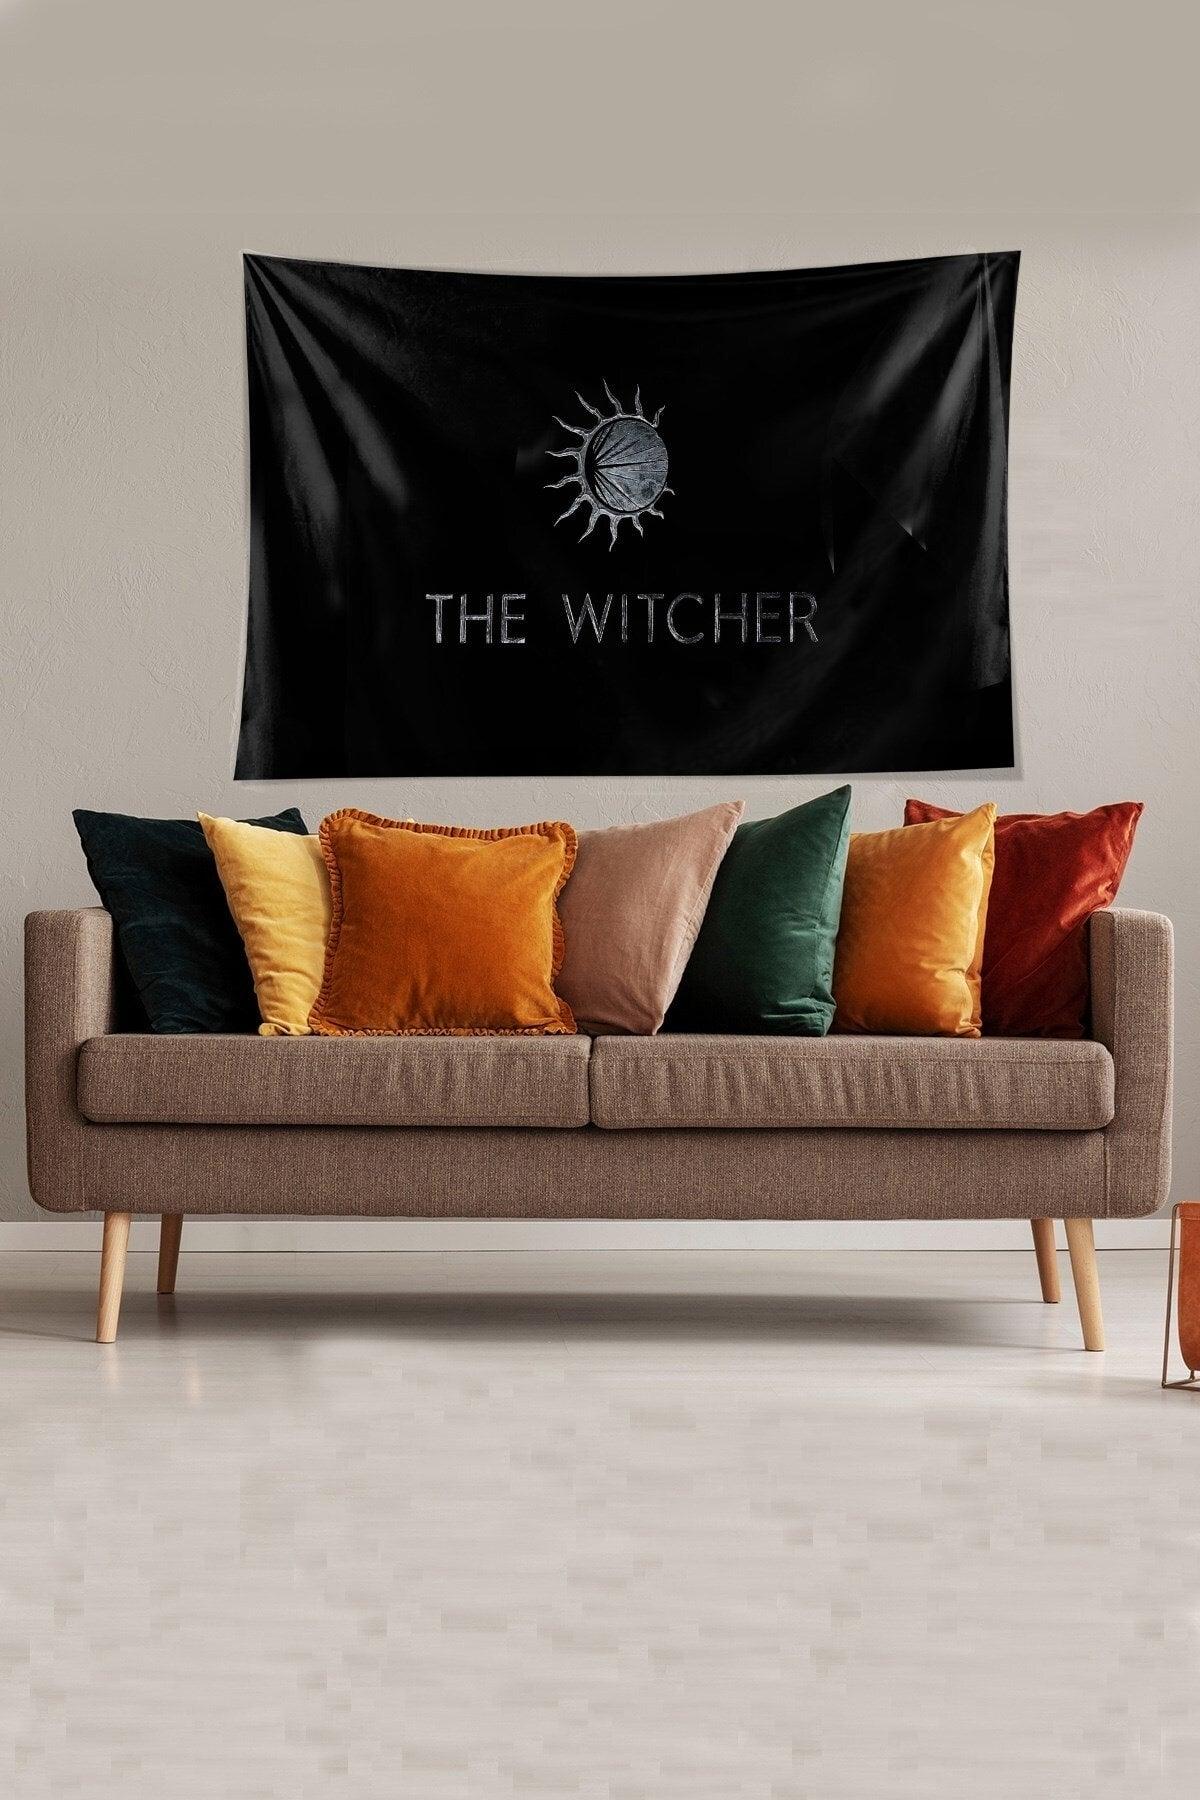 Black The Witcher Written Stain Resistant Velvet Fabric Wall Covering Tapestry Tapestry - Swordslife